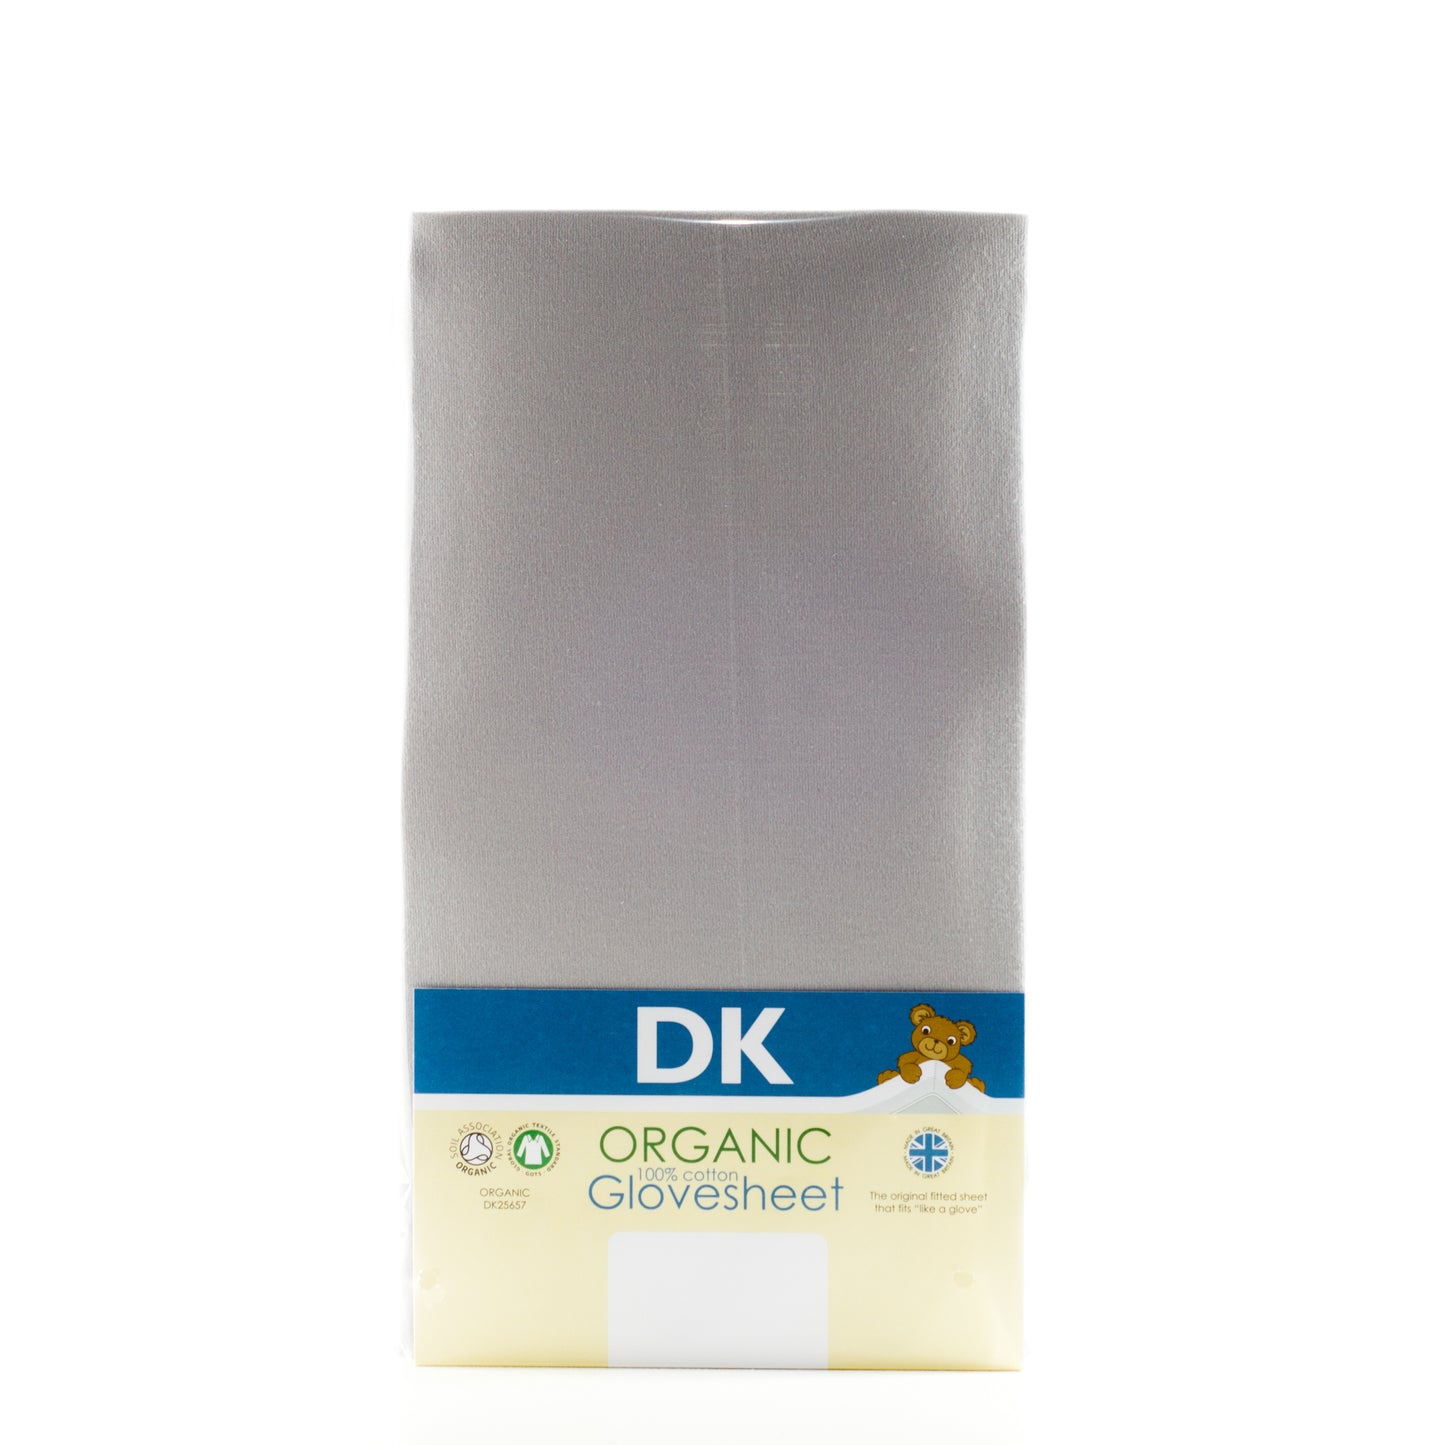 DK Organic Glovesheet-Large Travel Cot